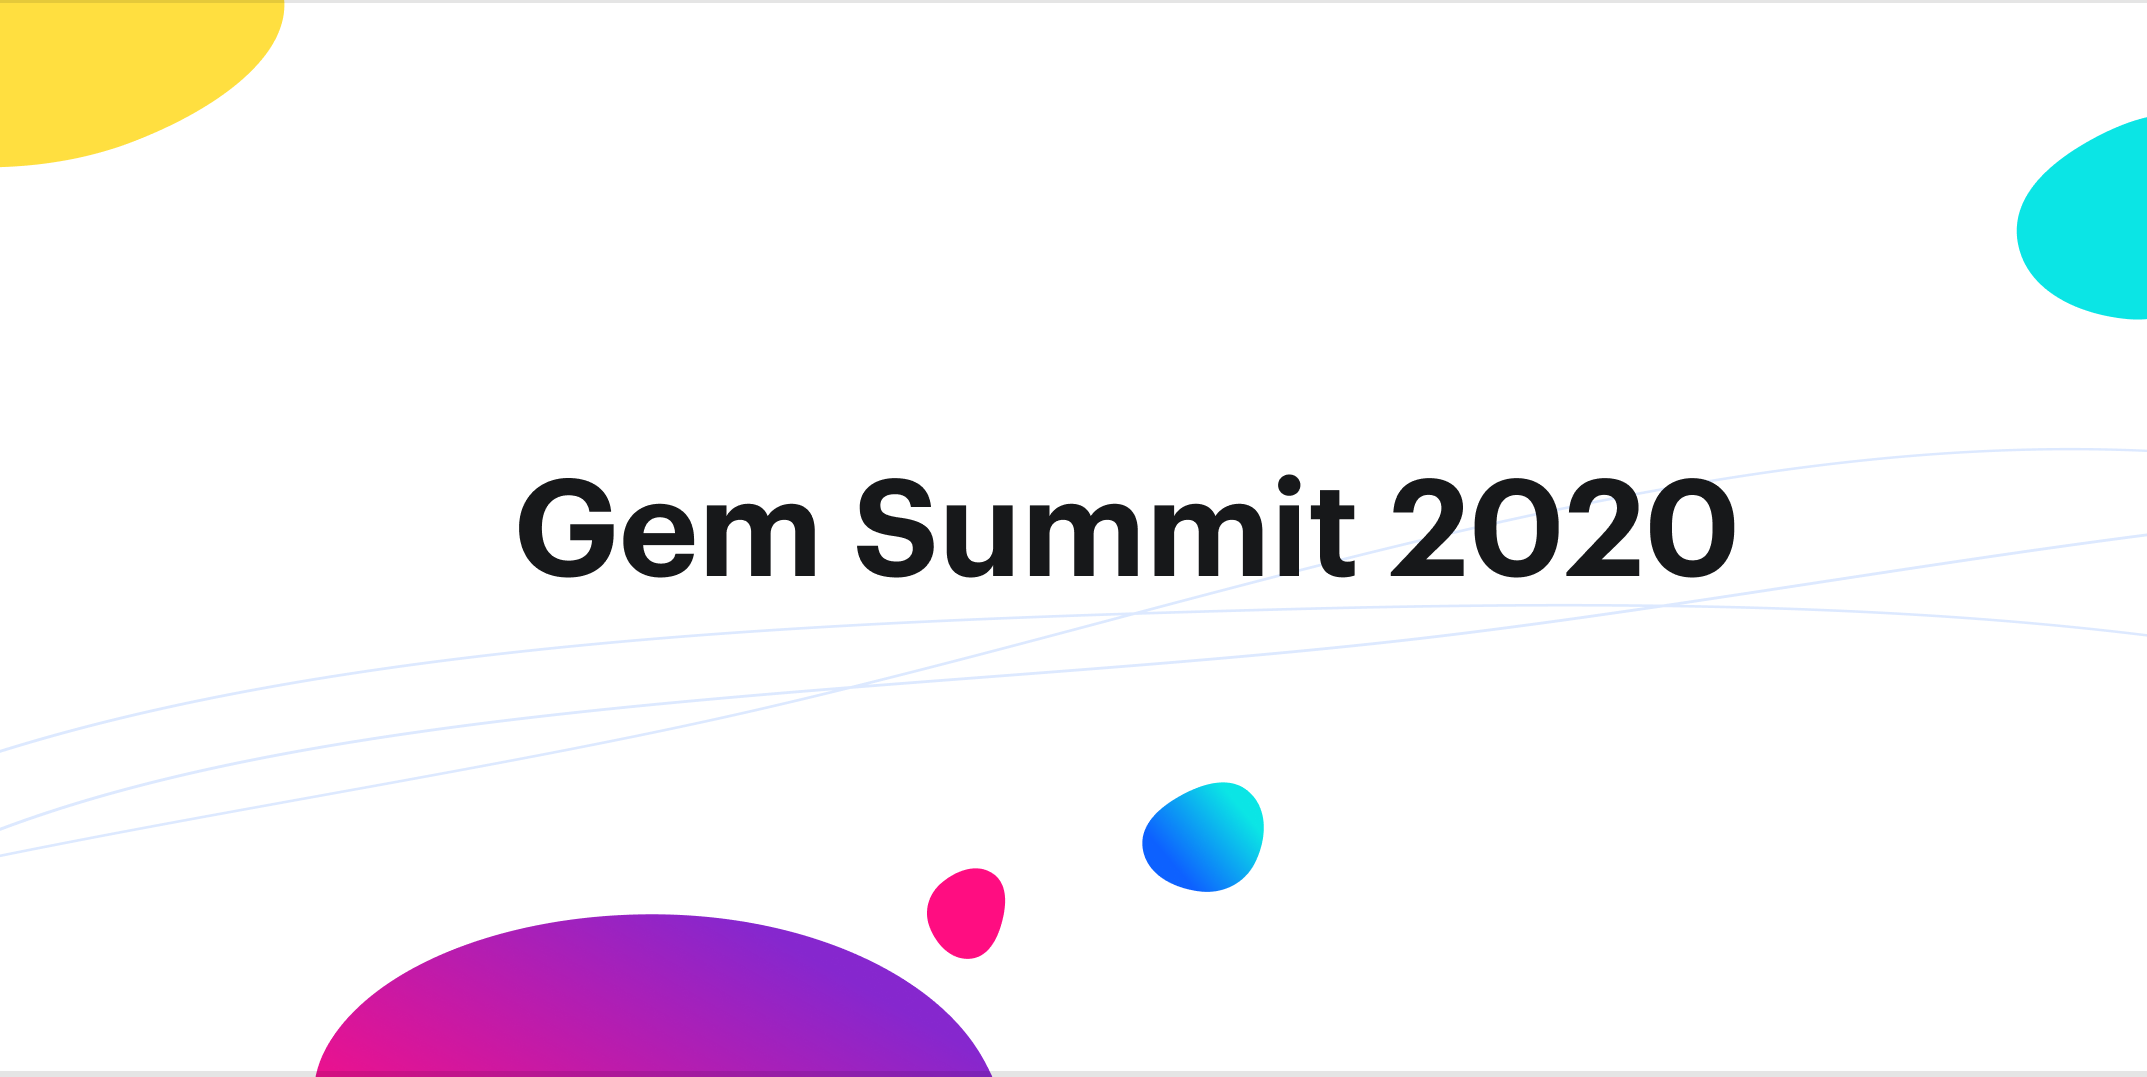 The Inaugural Gem Summit- 2020 Follow-Up